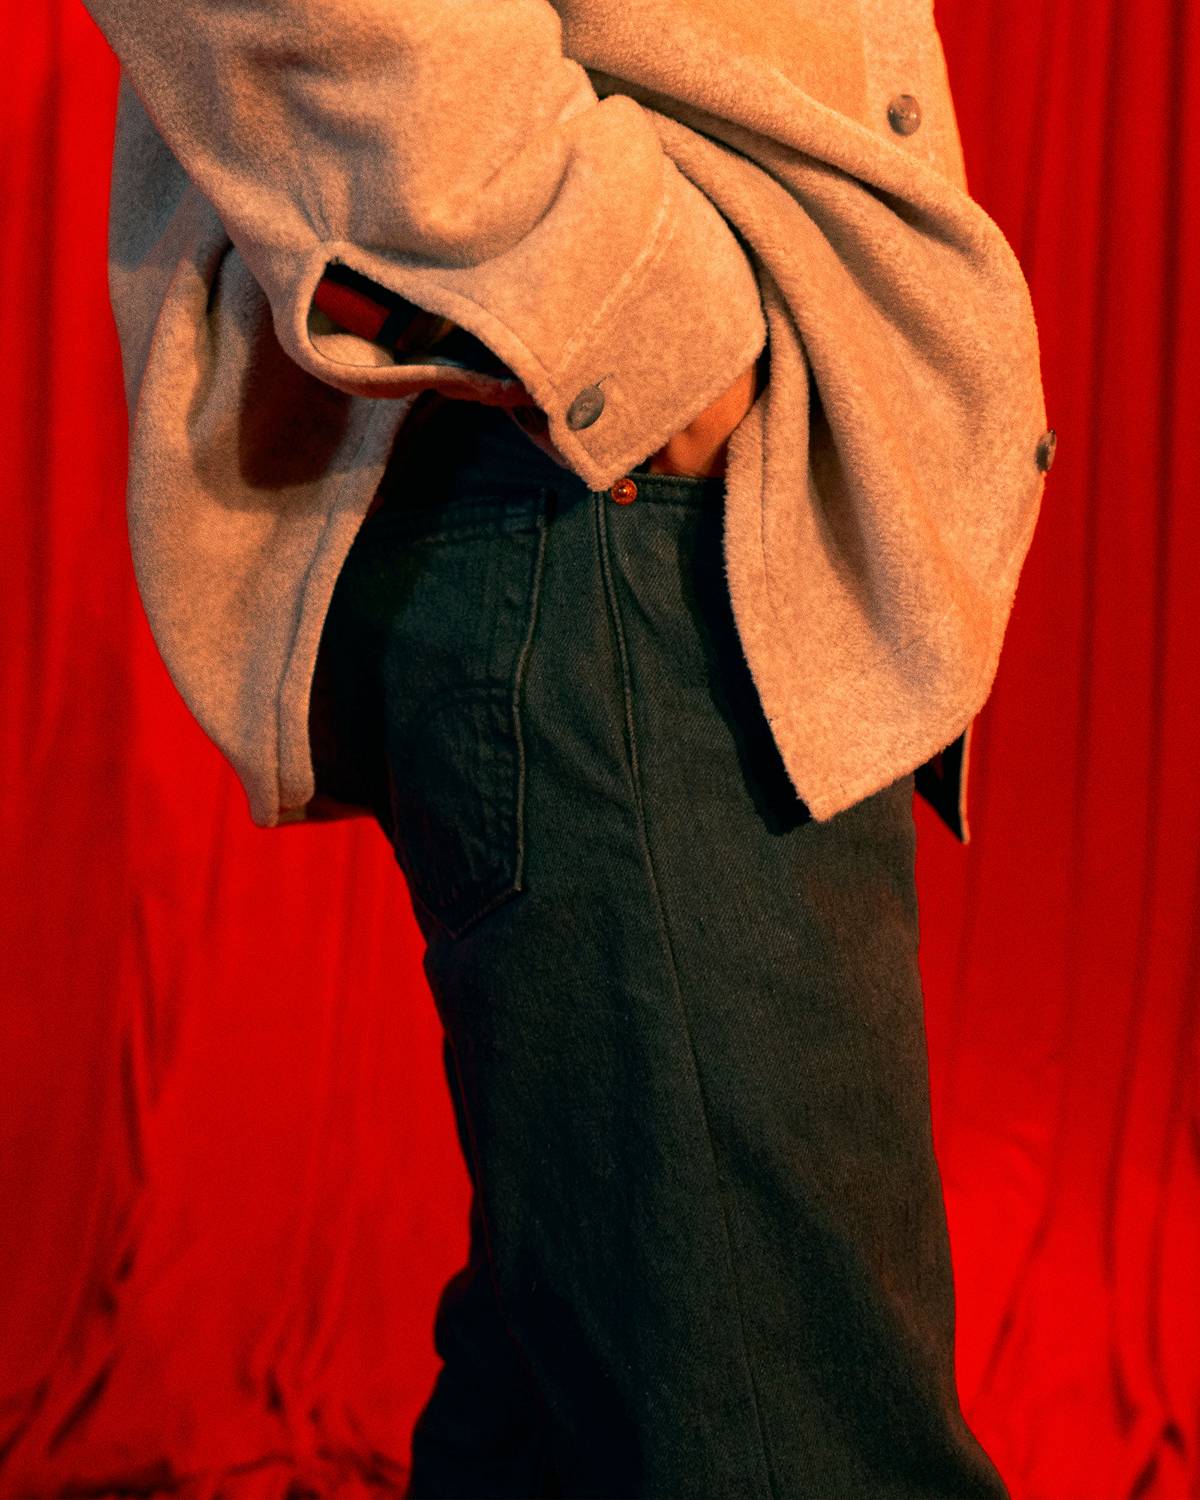 Closeup of a man wearing black 501® Originals against a red curtain back drop